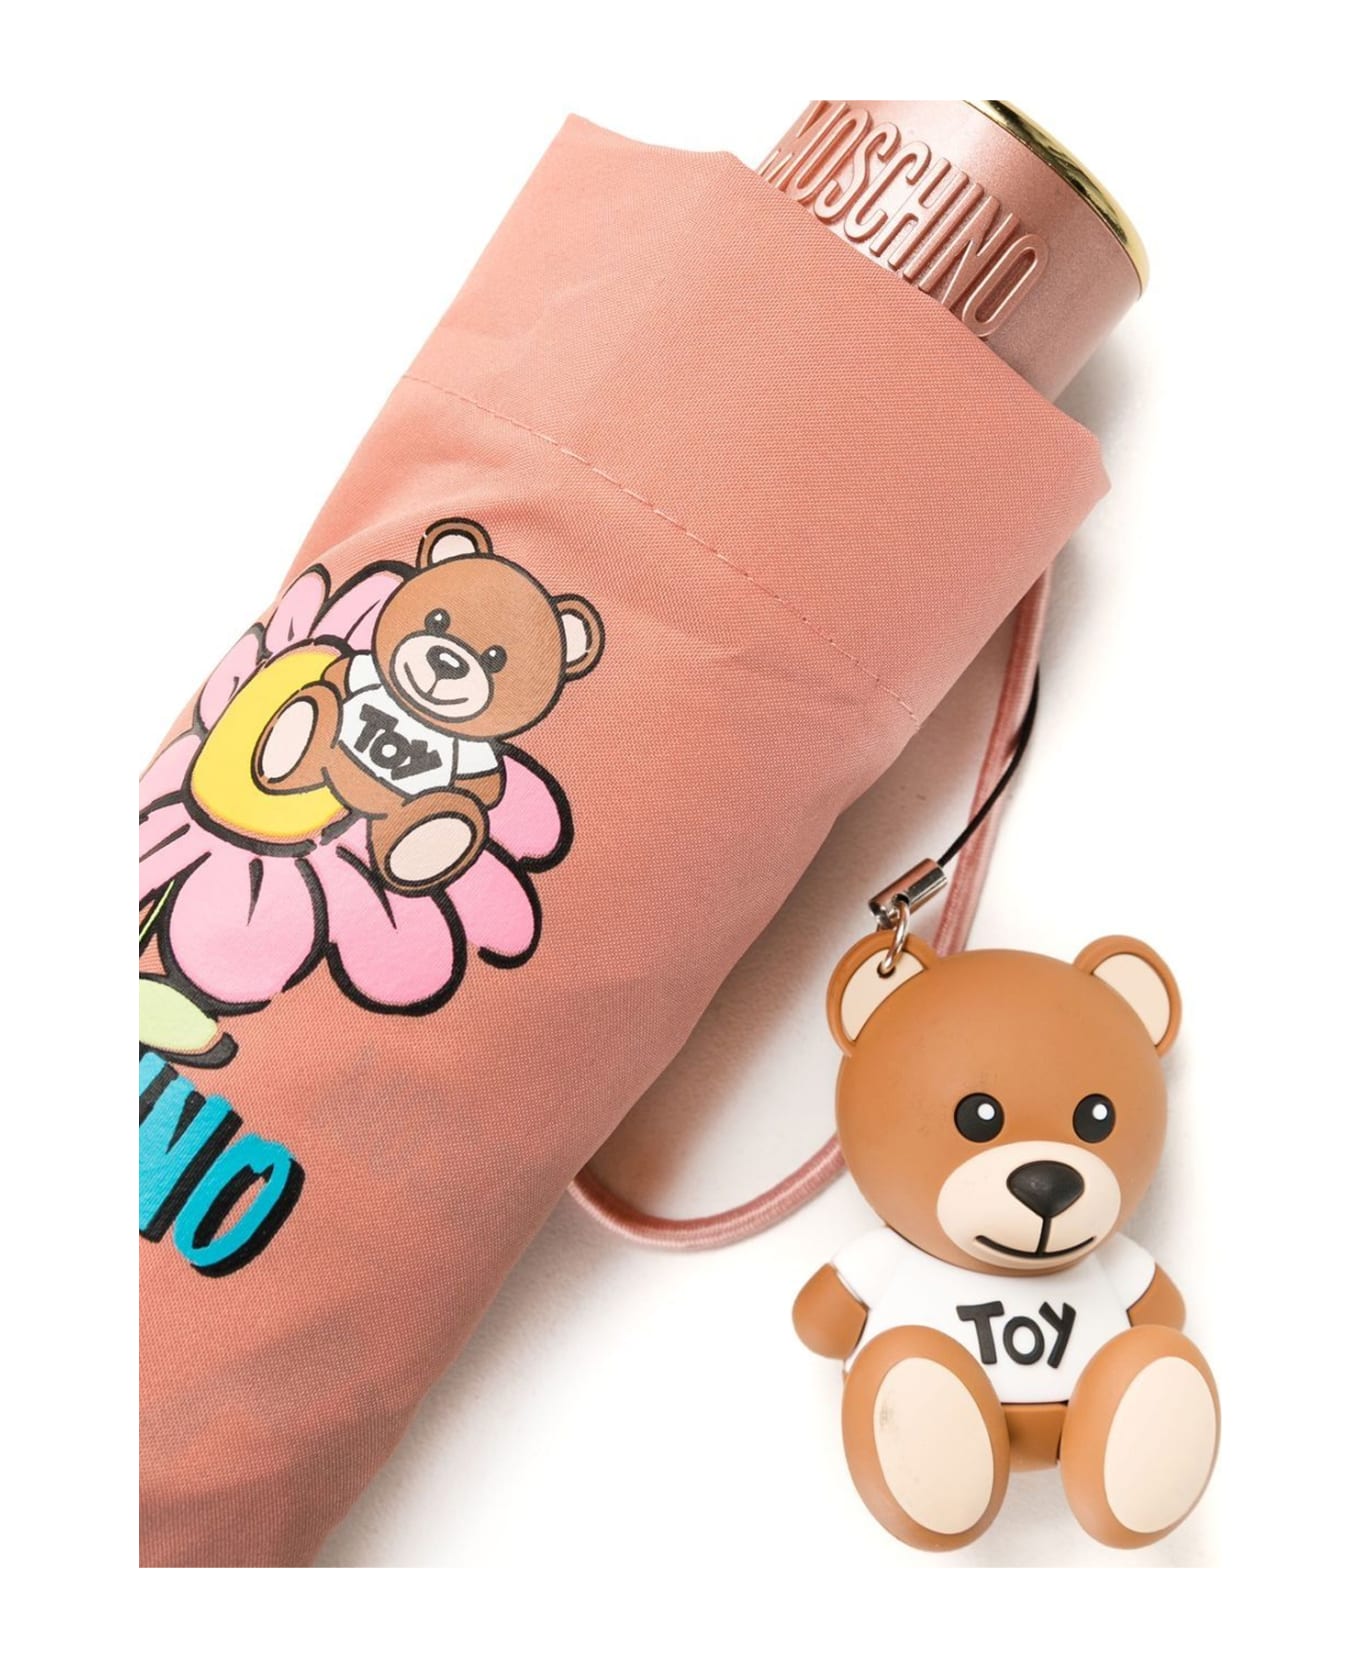 Moschino Flower Bear With Pendant Teddy Supermini Umbrella - N Pink Pendant Teddy